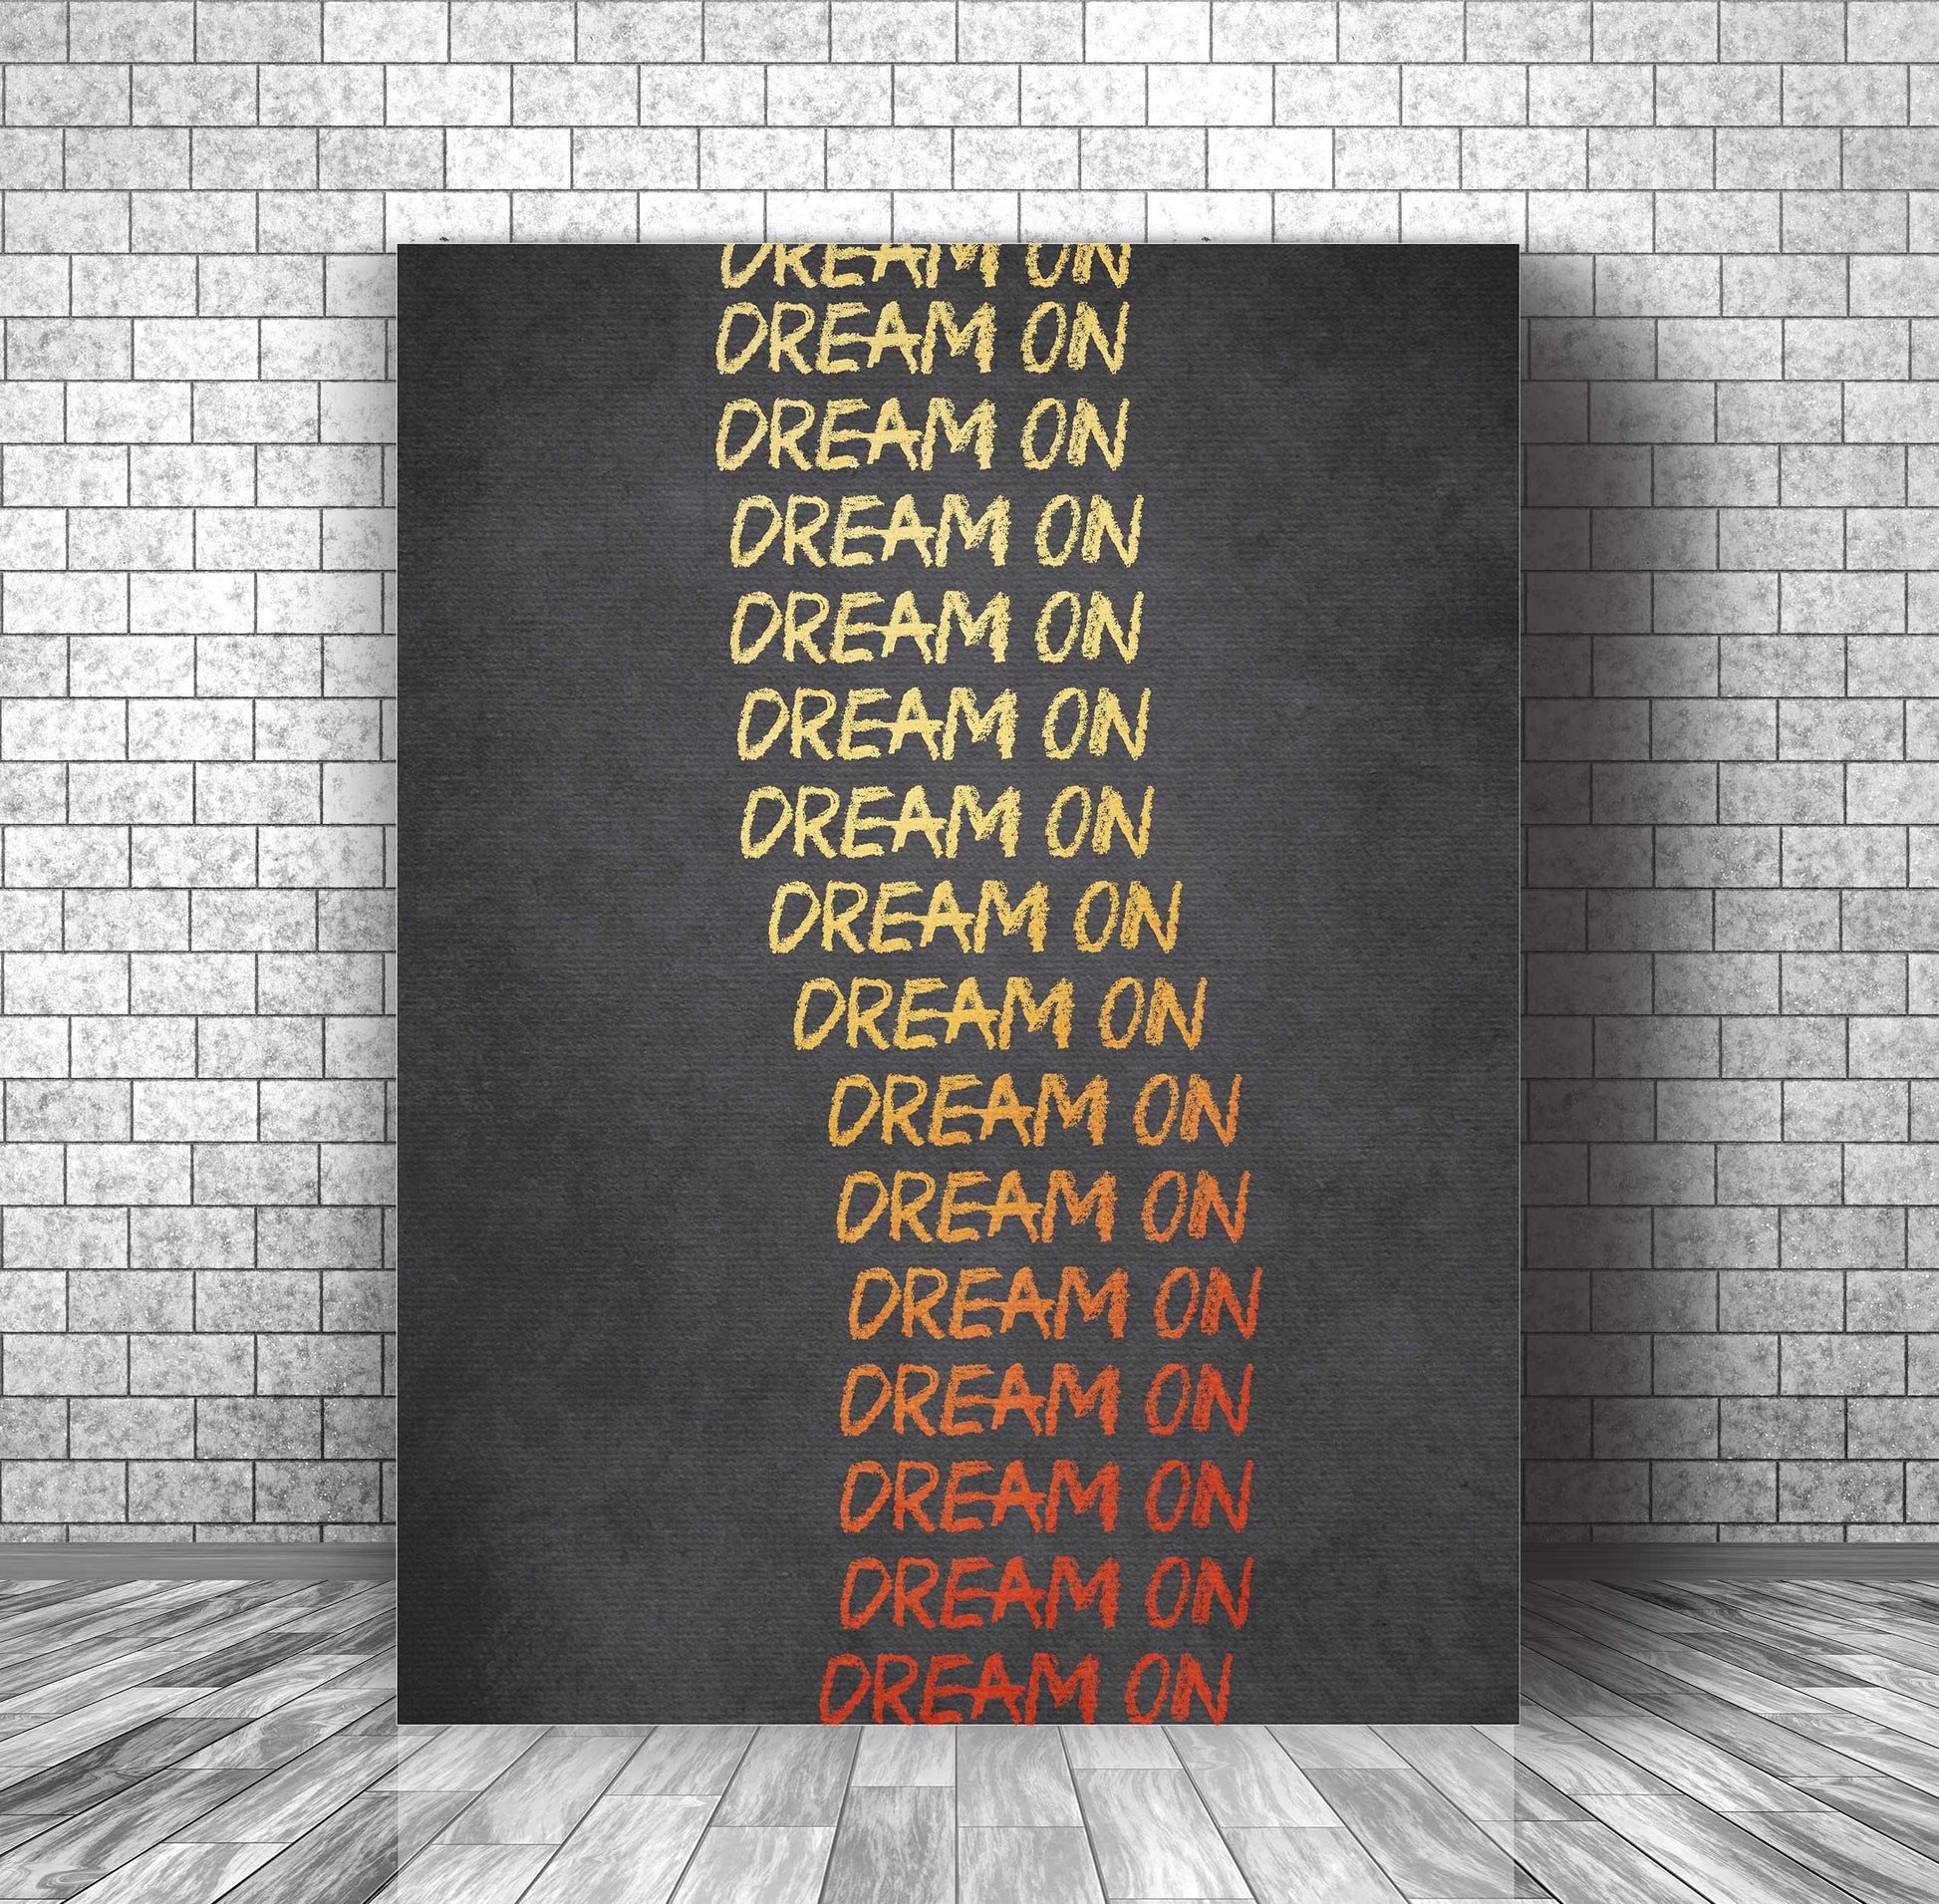 Dream On by Aerosmith - Song Lyric Rock Music Wall Print Song Lyrics Art Song Lyrics Art 11x14 Canvas Wrap 